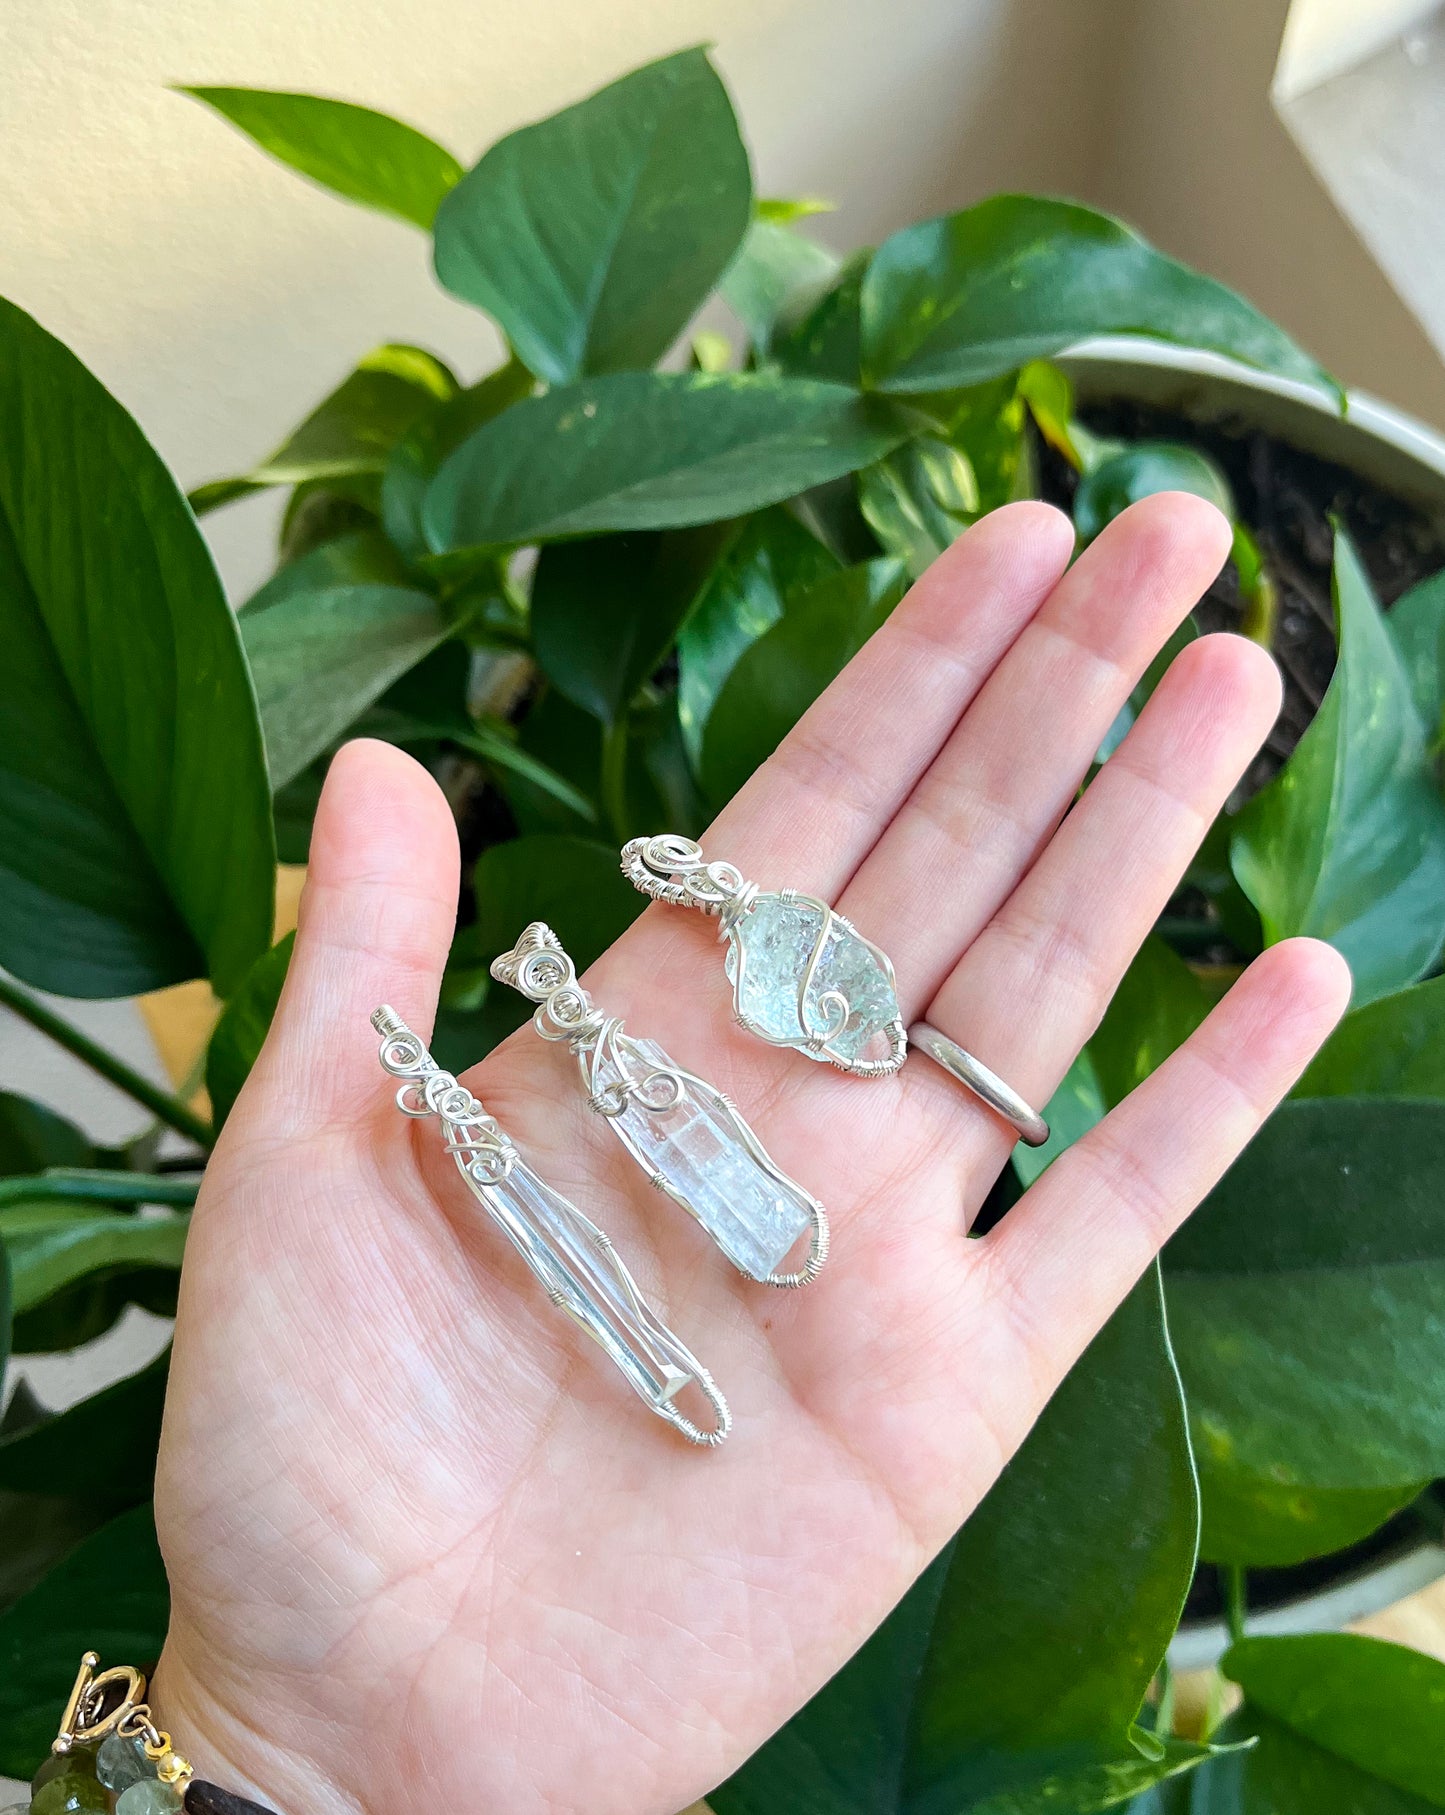 Natural Aquamarine Silver Pendant (choose your own)